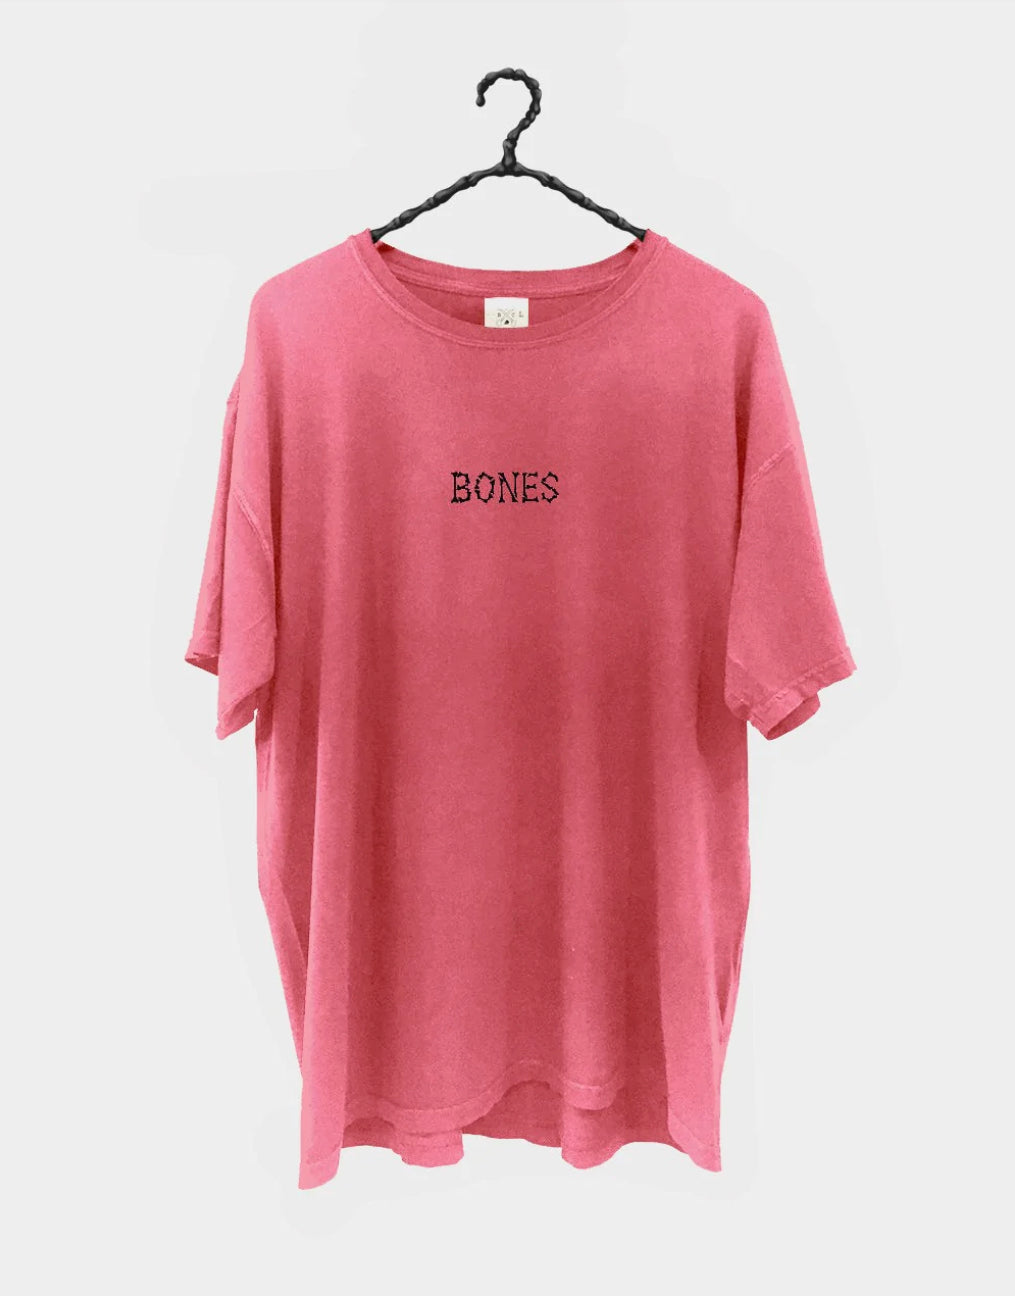 Billy Bones Club Bones Club Tee Post Watermelone - Unisex